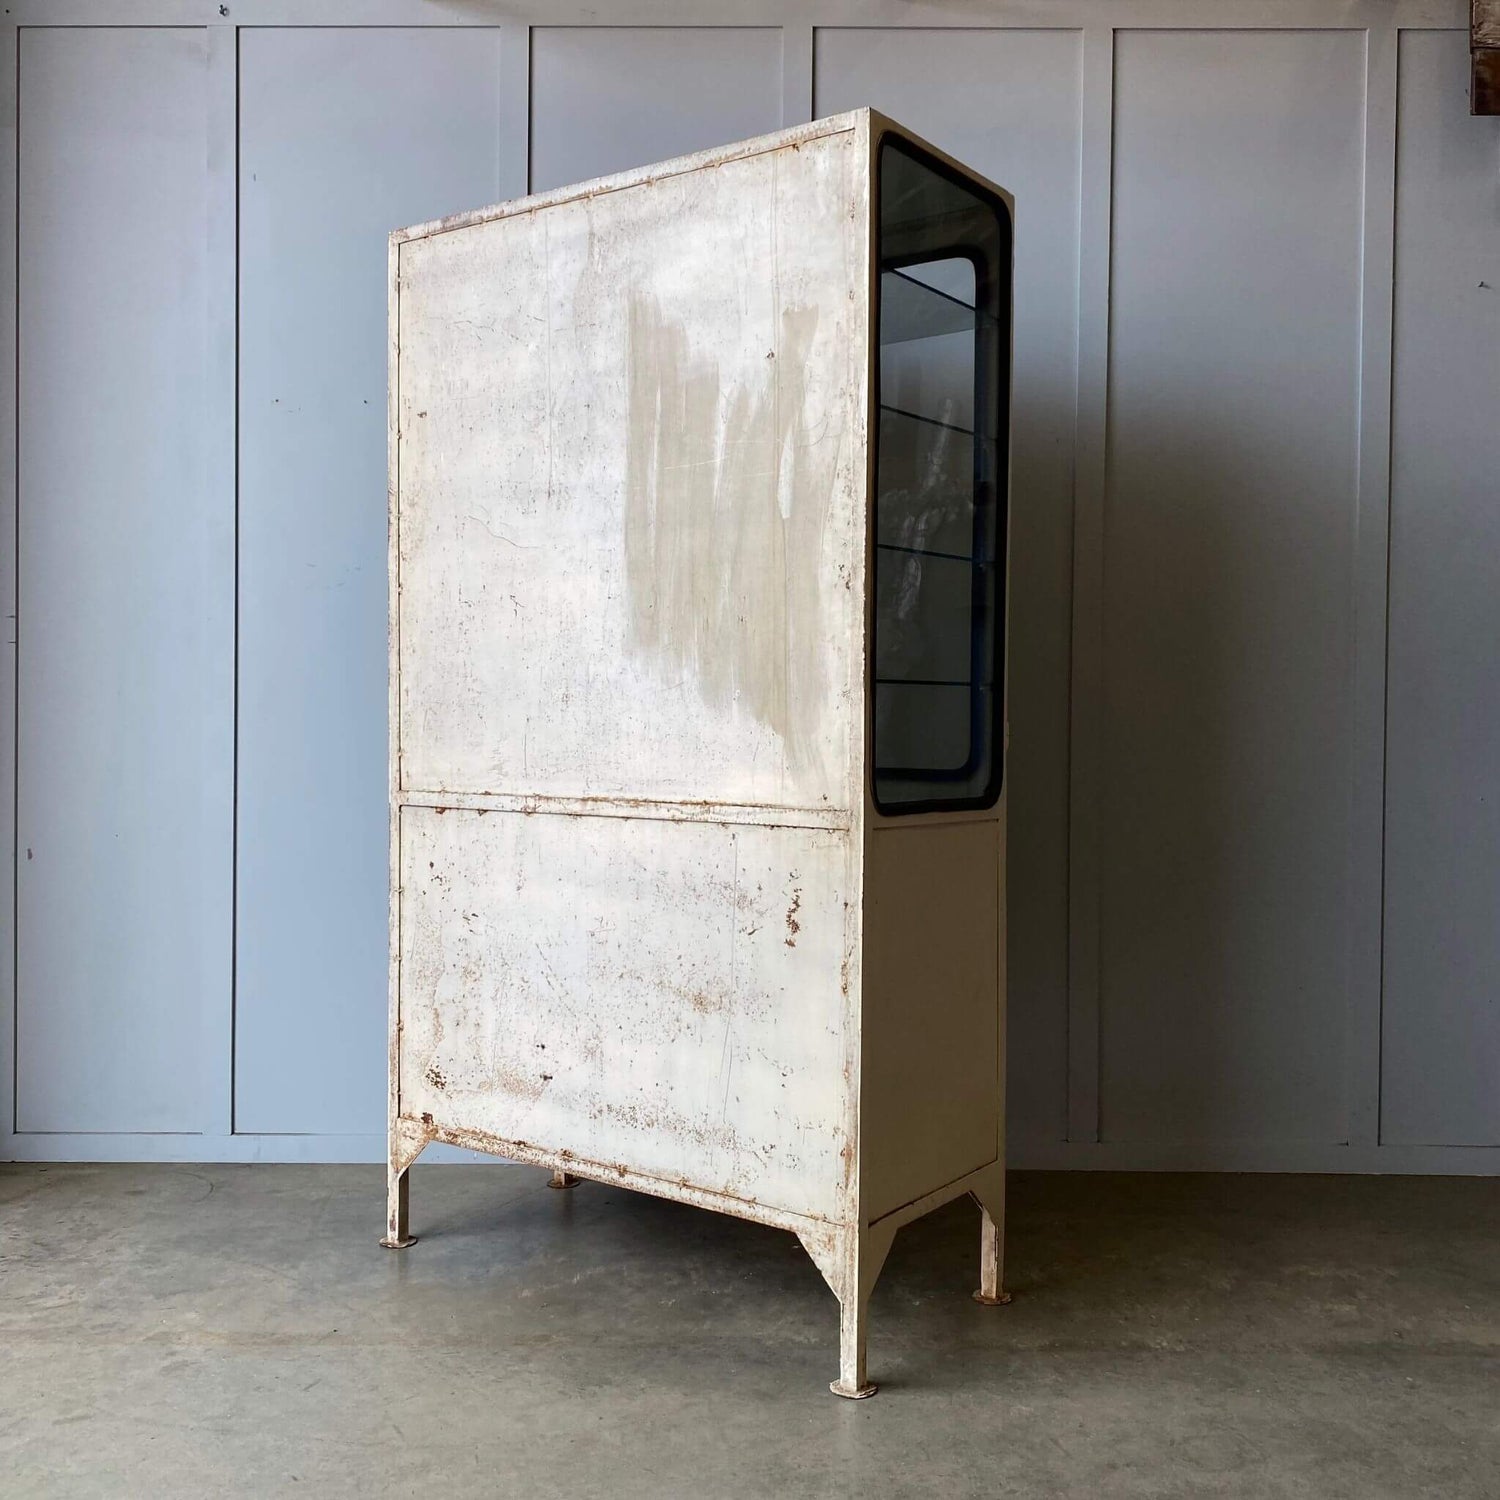 A vintage steel cabinet